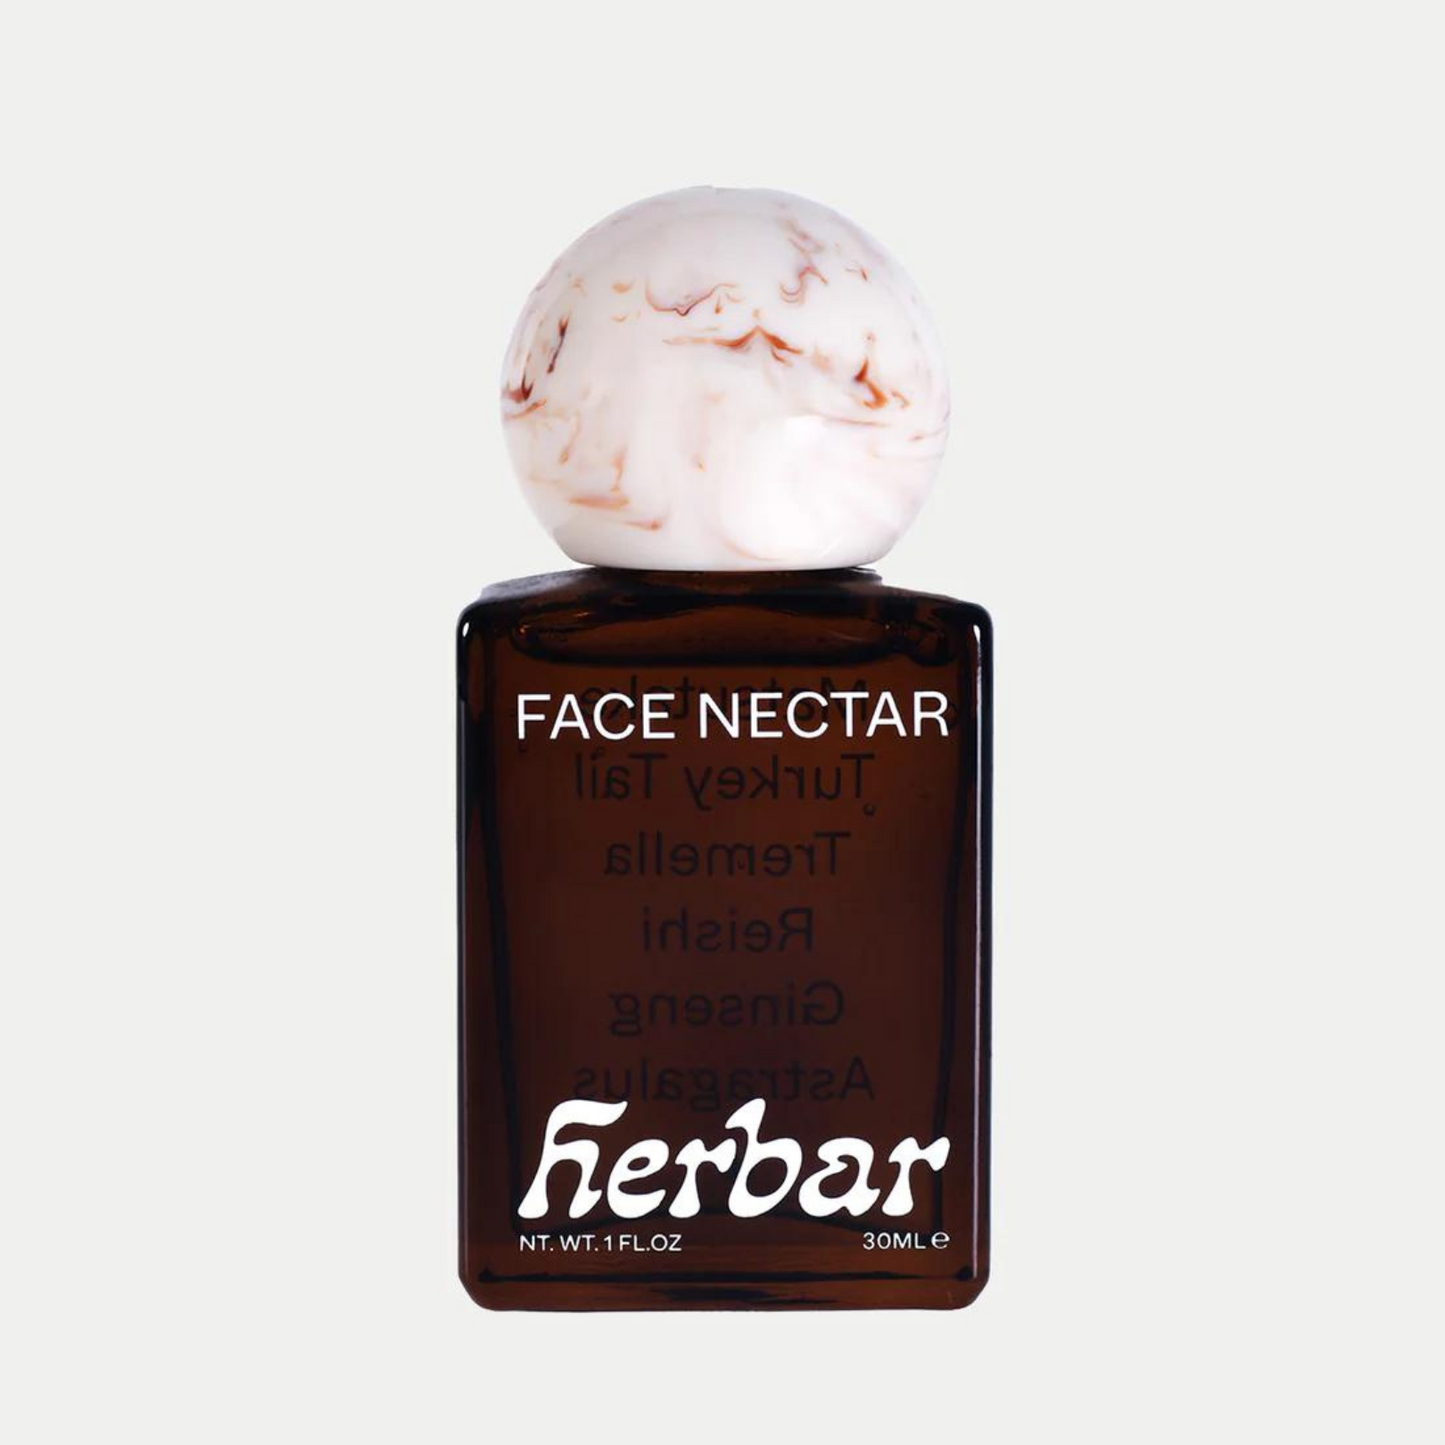 The Face Nectar - NEW